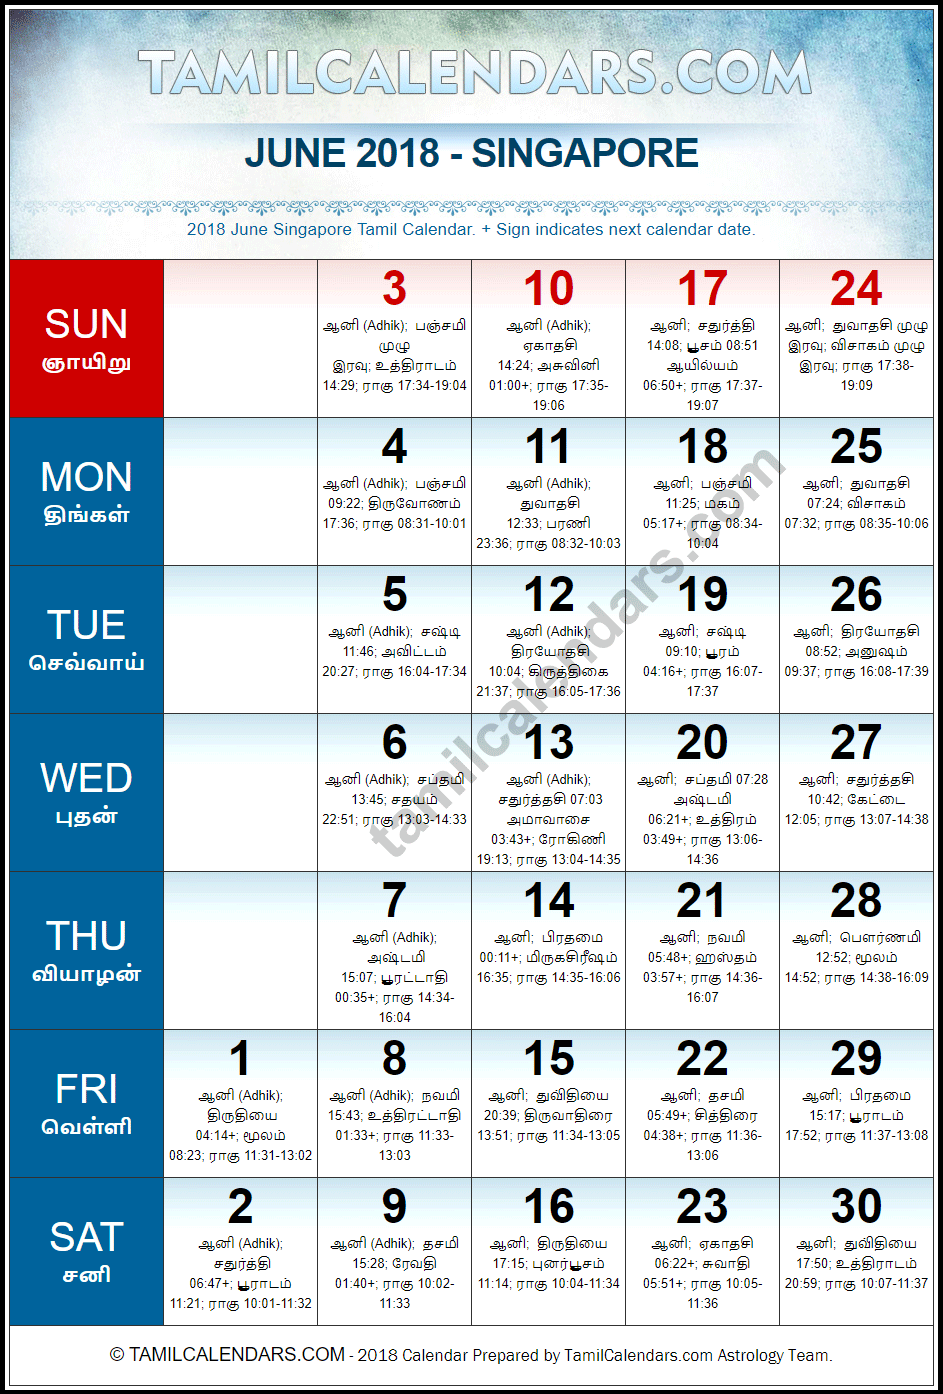 June 2018 Tamil Calendar for Singapore